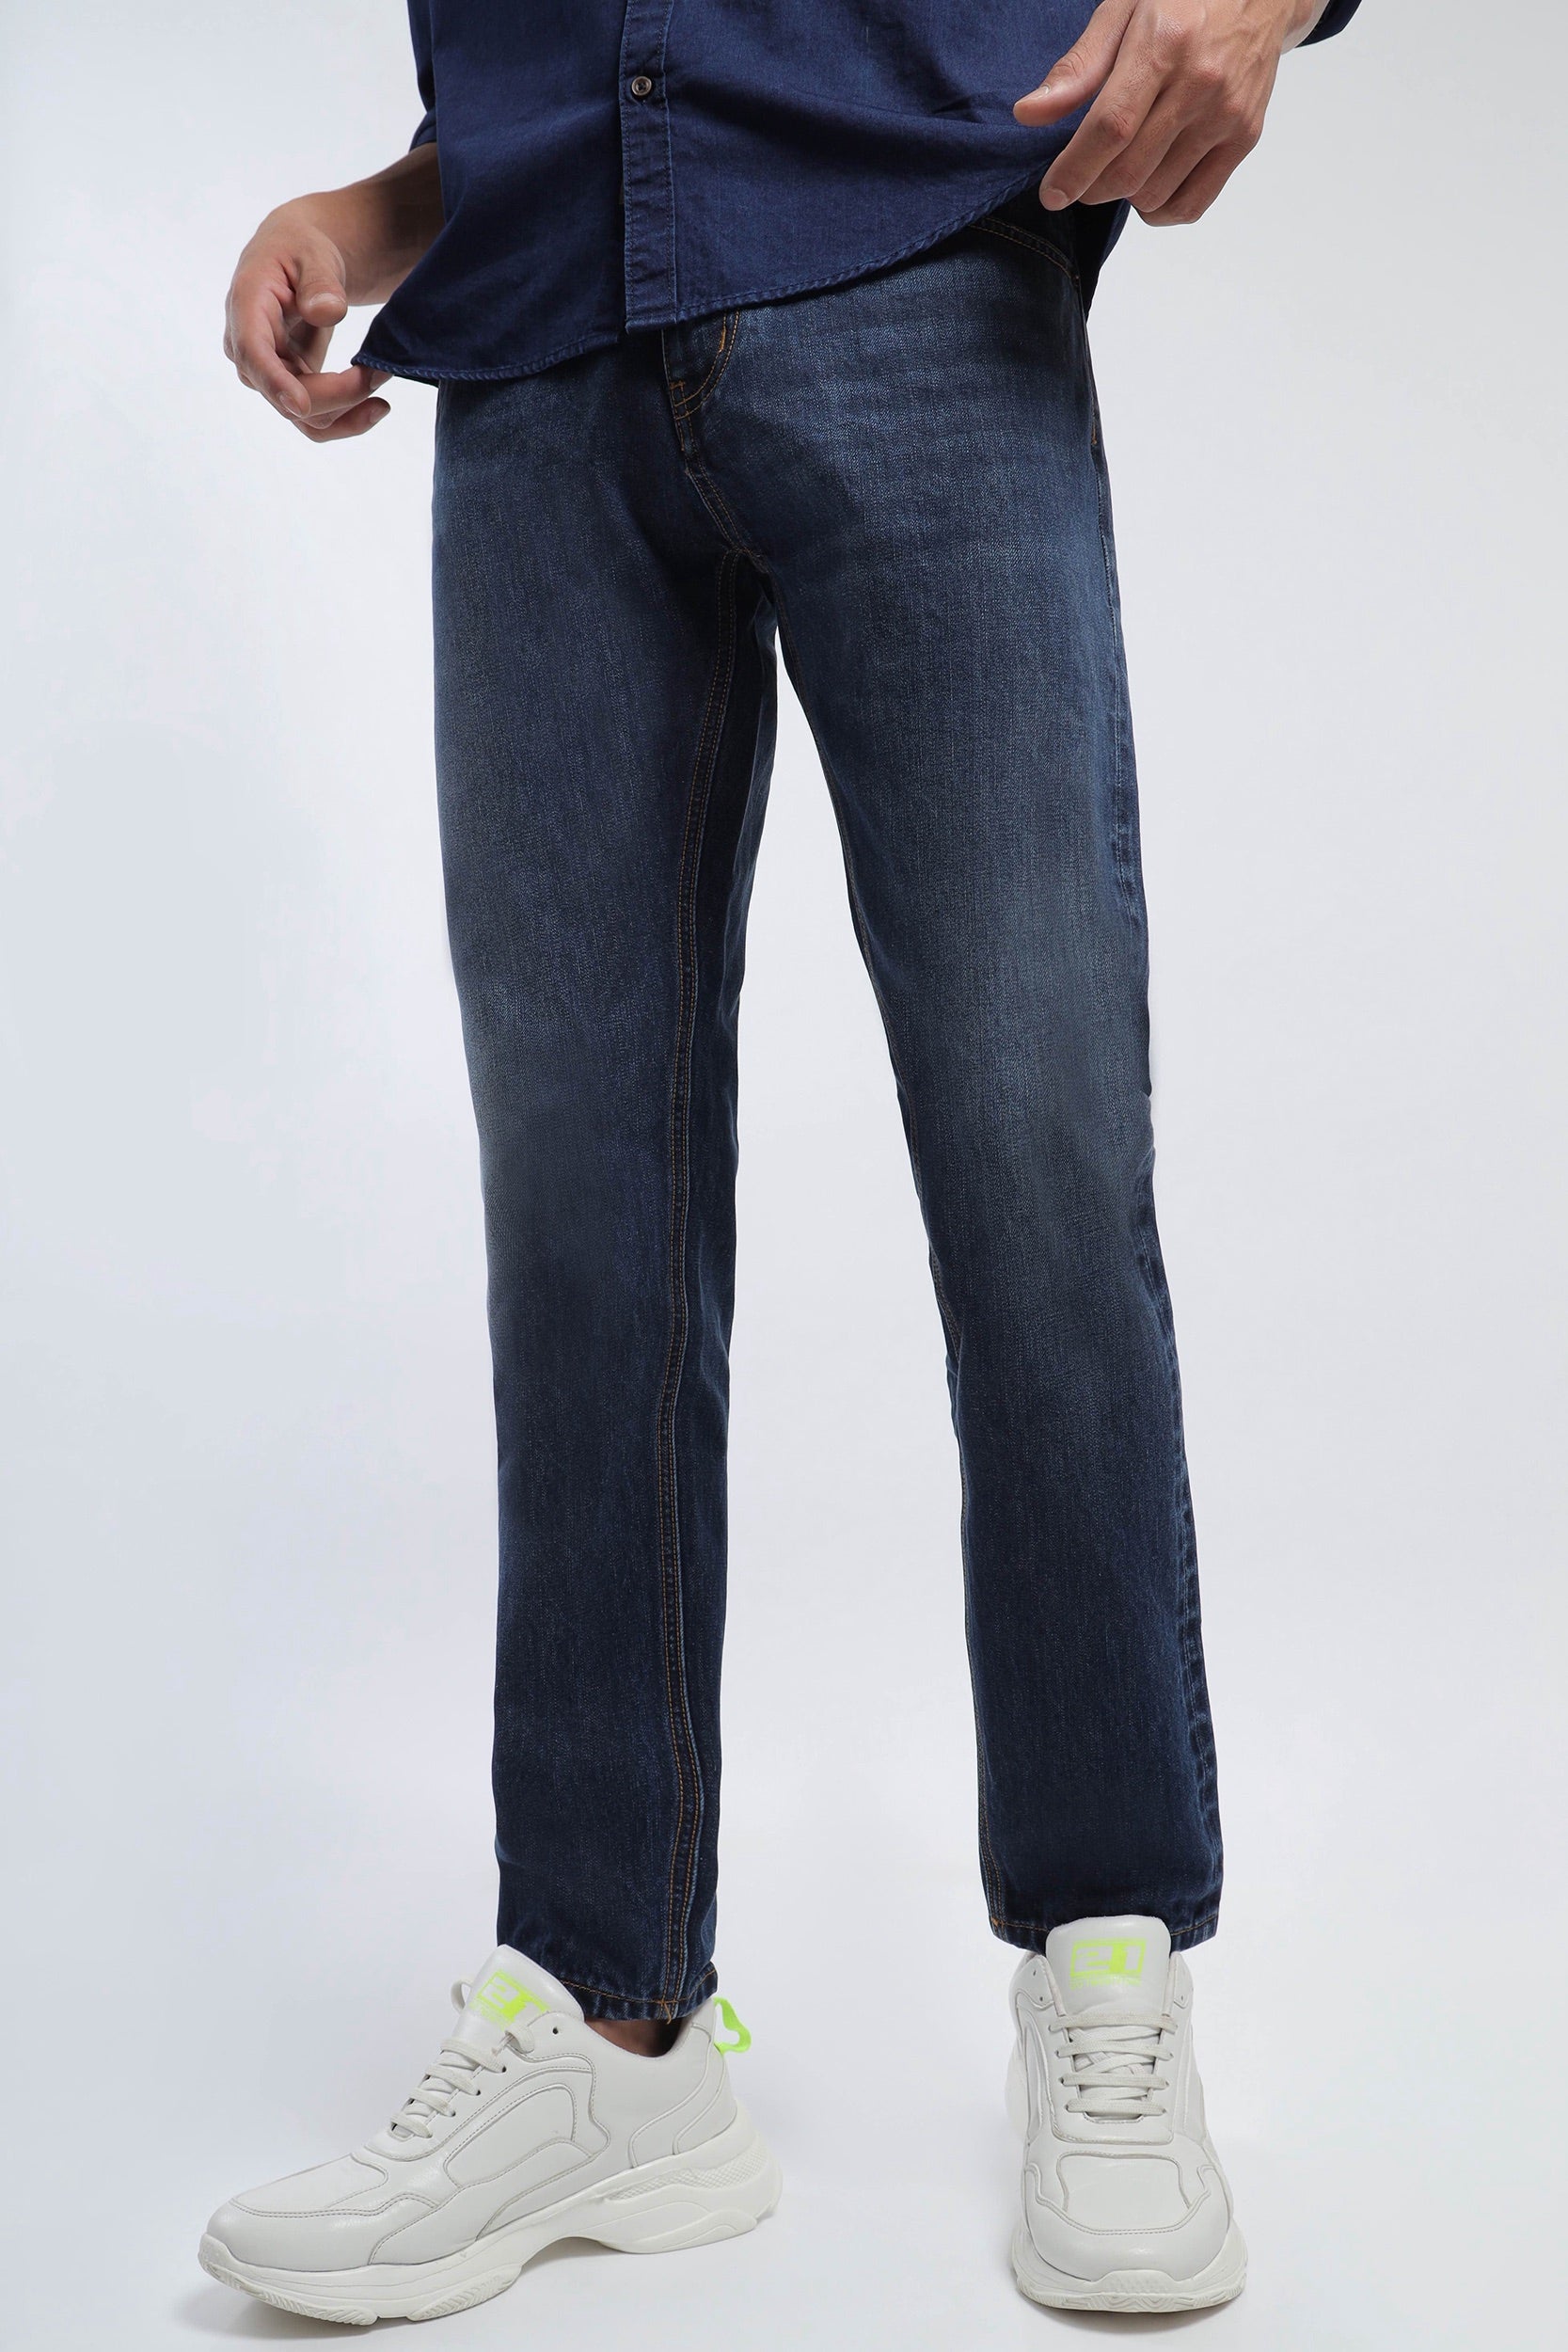 Original UNIQLO Selvedge Denim Jeans Kaihara Japan Slim Regular Straight  Fit  NavyBlack  Shopee Malaysia